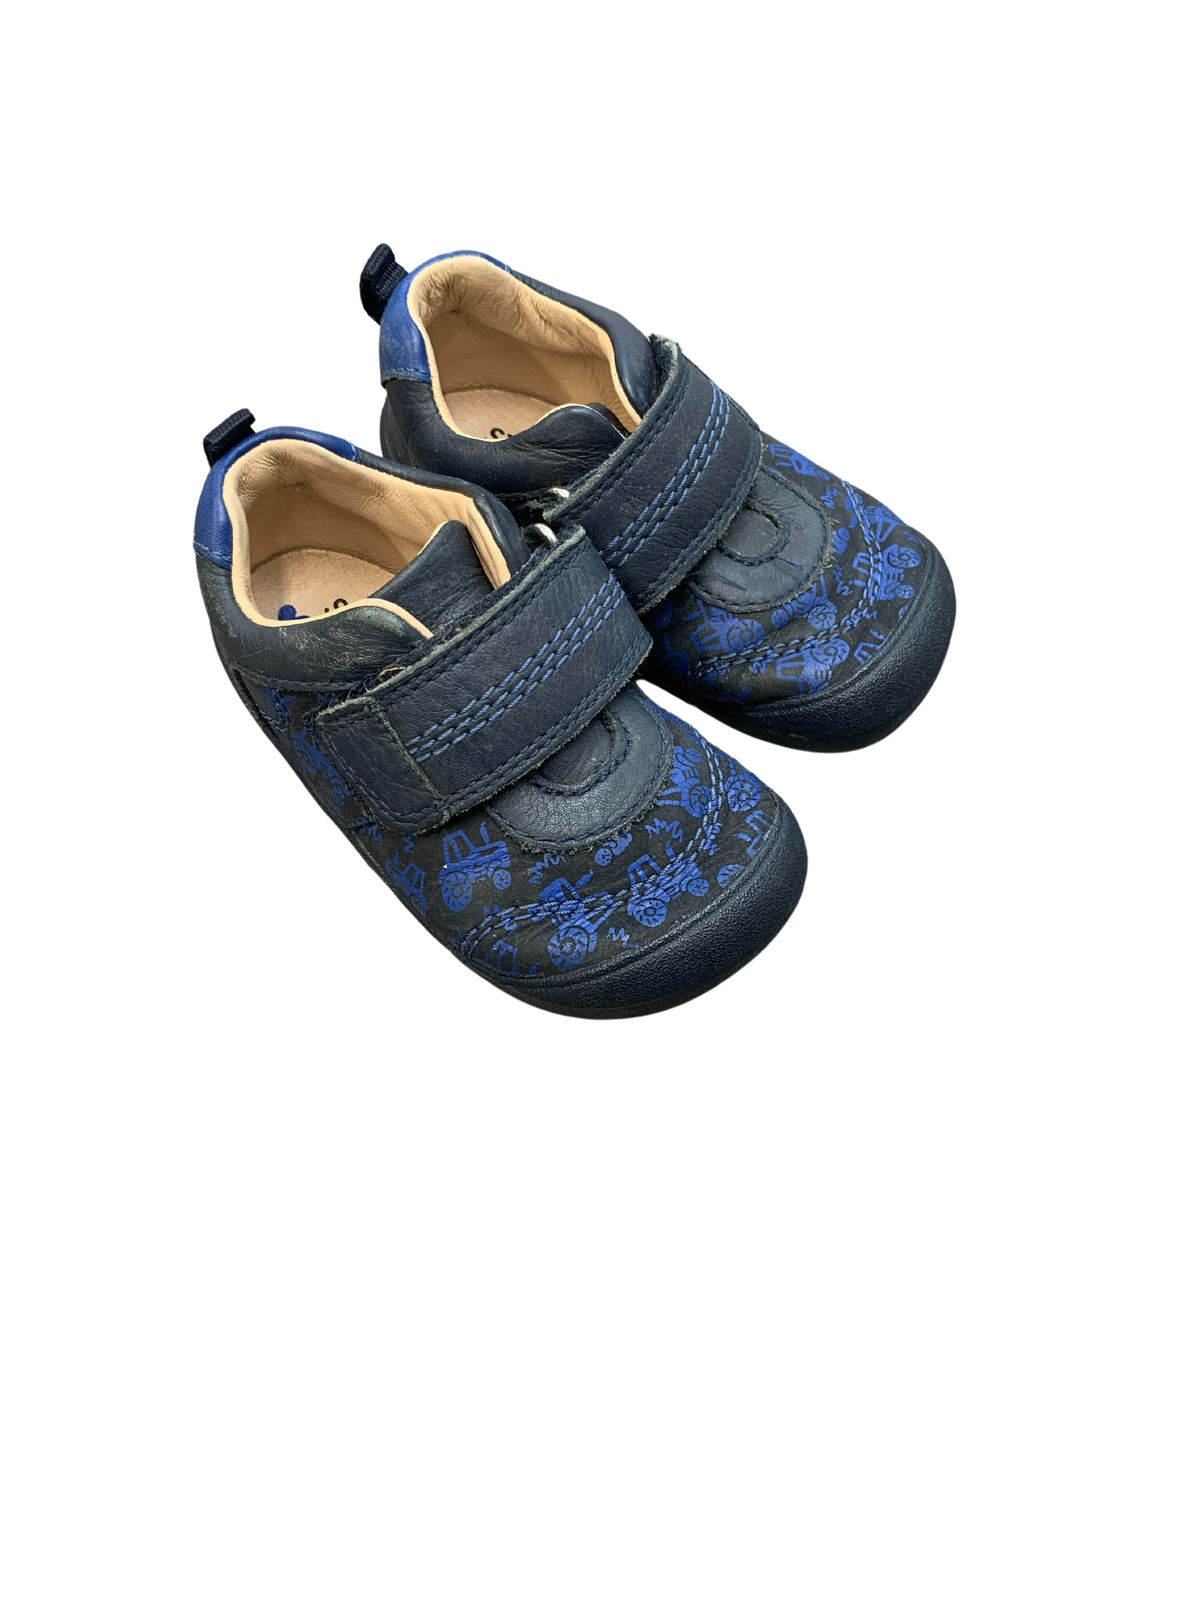 Jojo Maman Babe Soft Rubber Velcro Shoes Infant Boy Size 5G